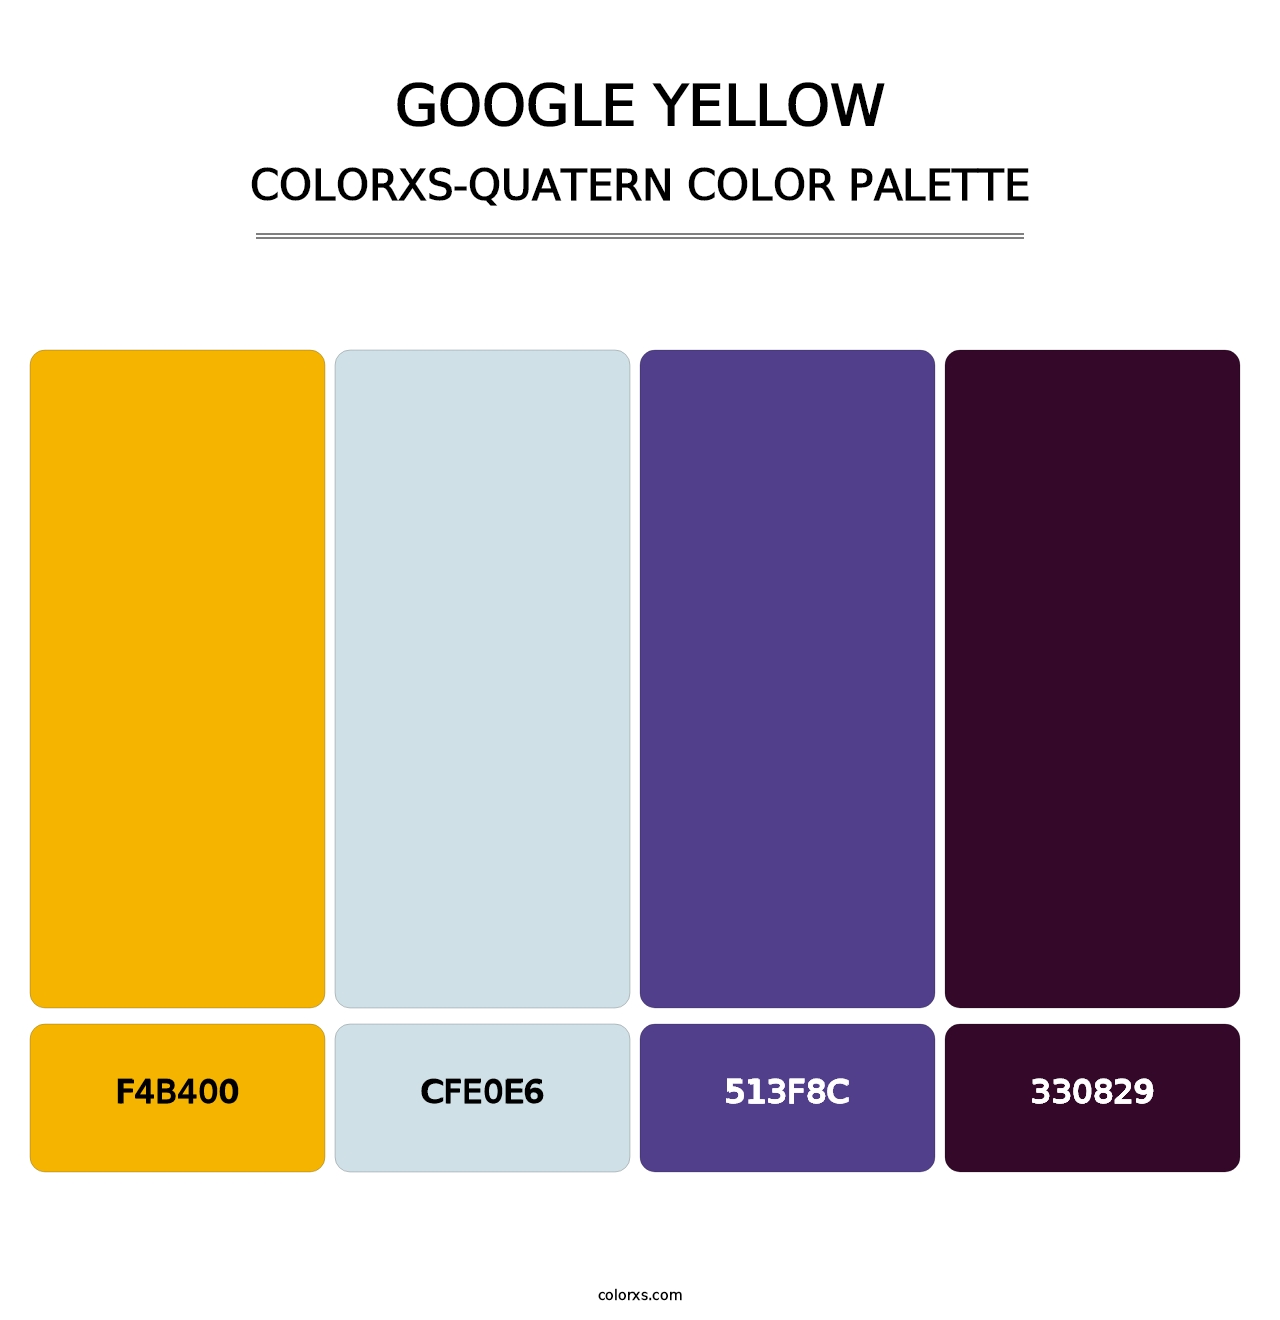 Google Yellow - Colorxs Quatern Palette